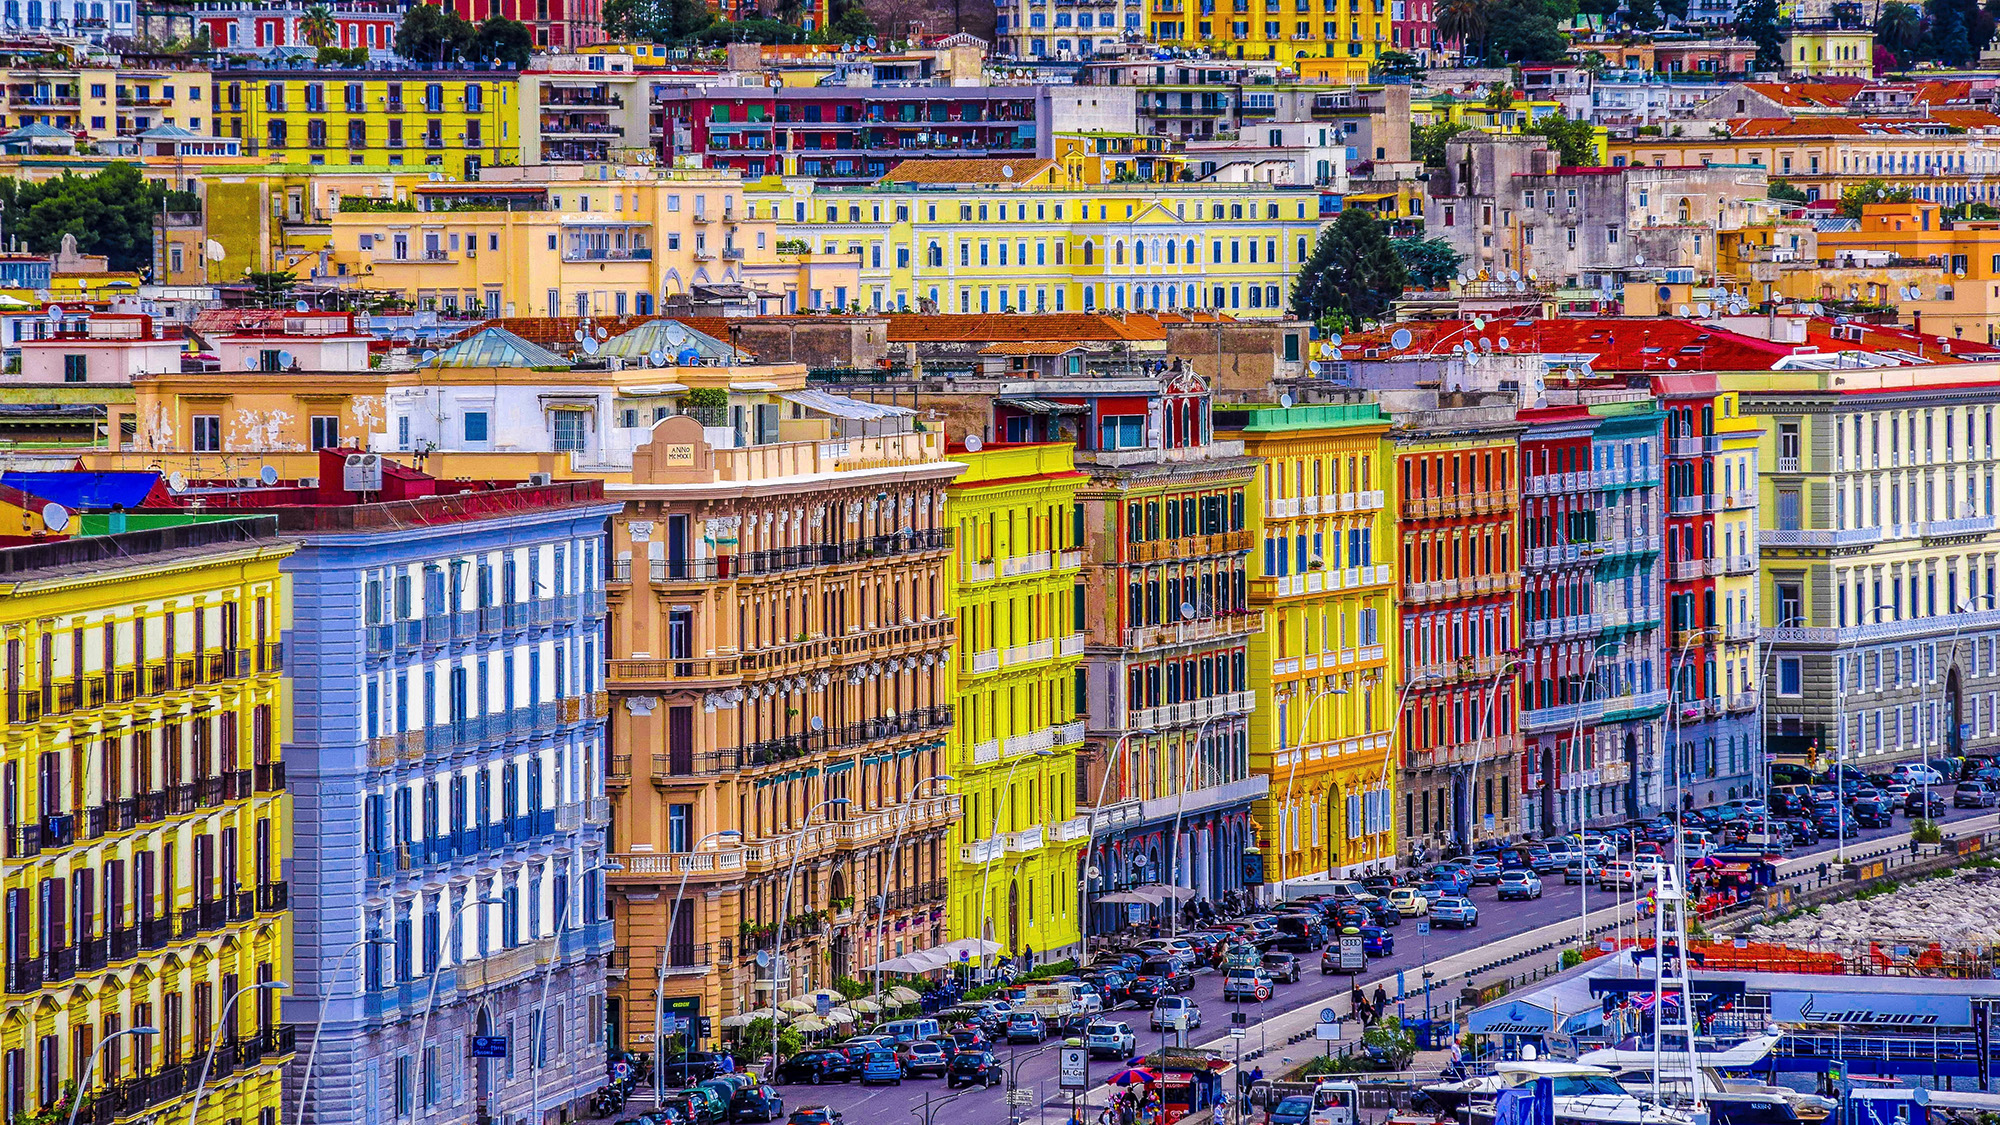 Colorful buildings in Napoli